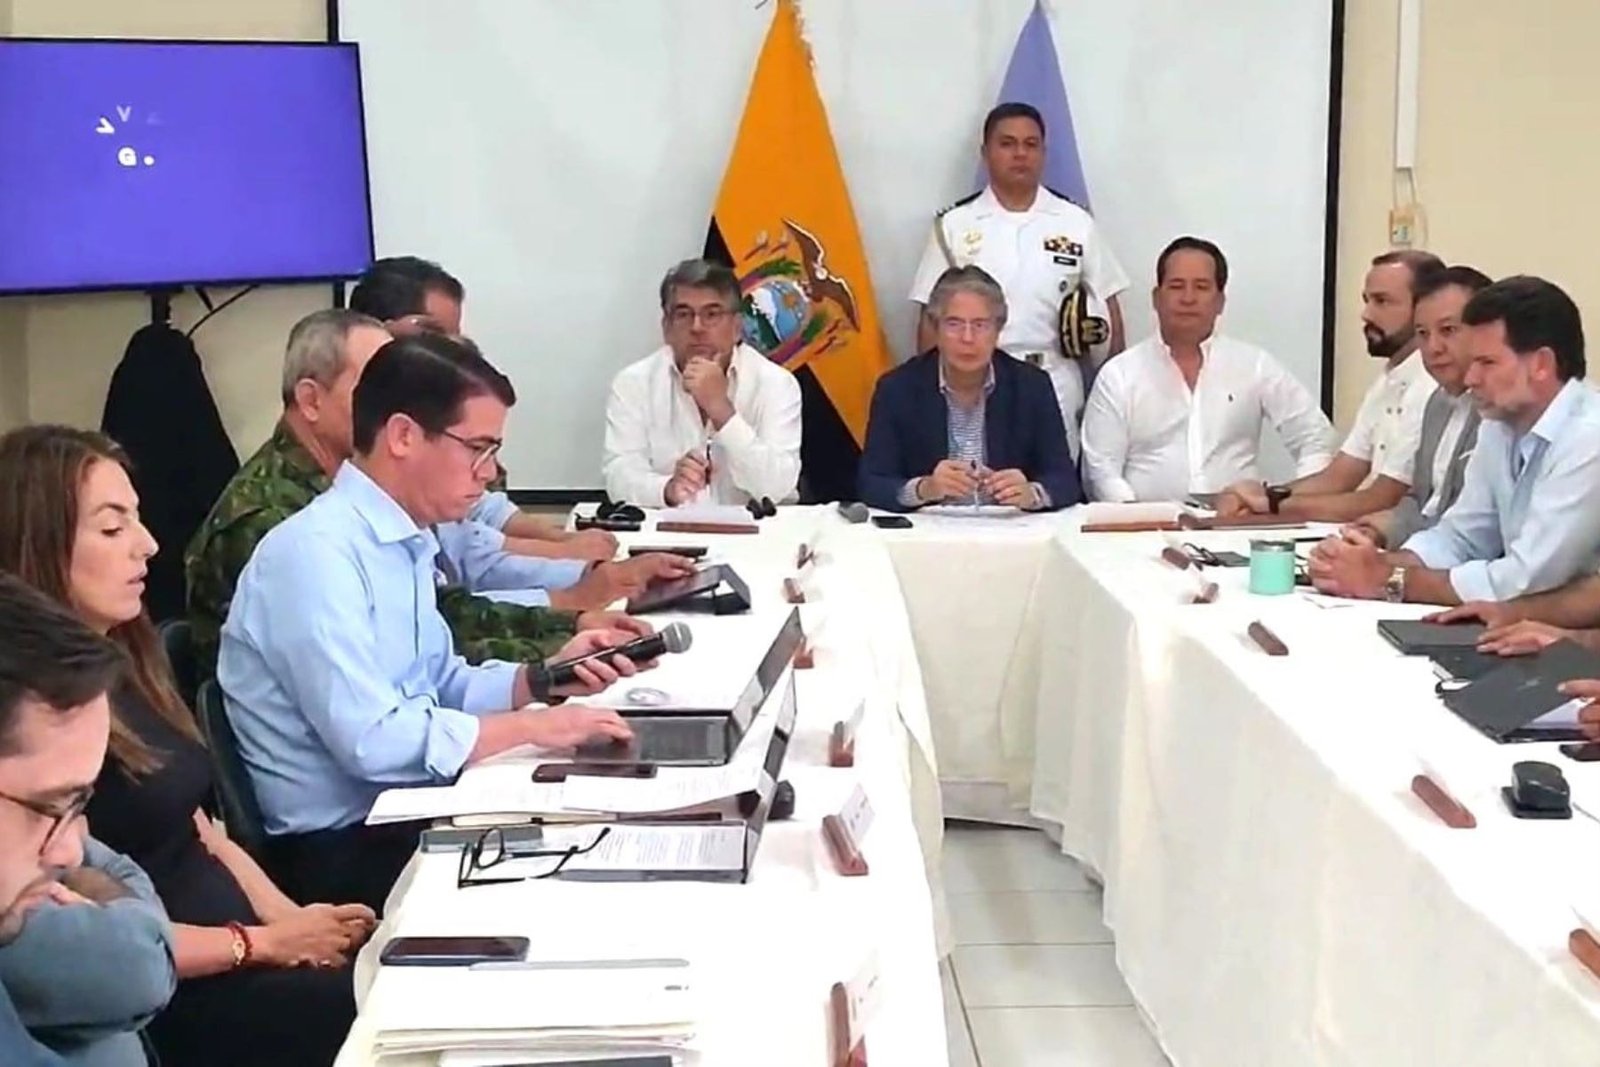 Ecuador declara estado de excepción por 60 días en tres zonas tras asesinato de alcalde